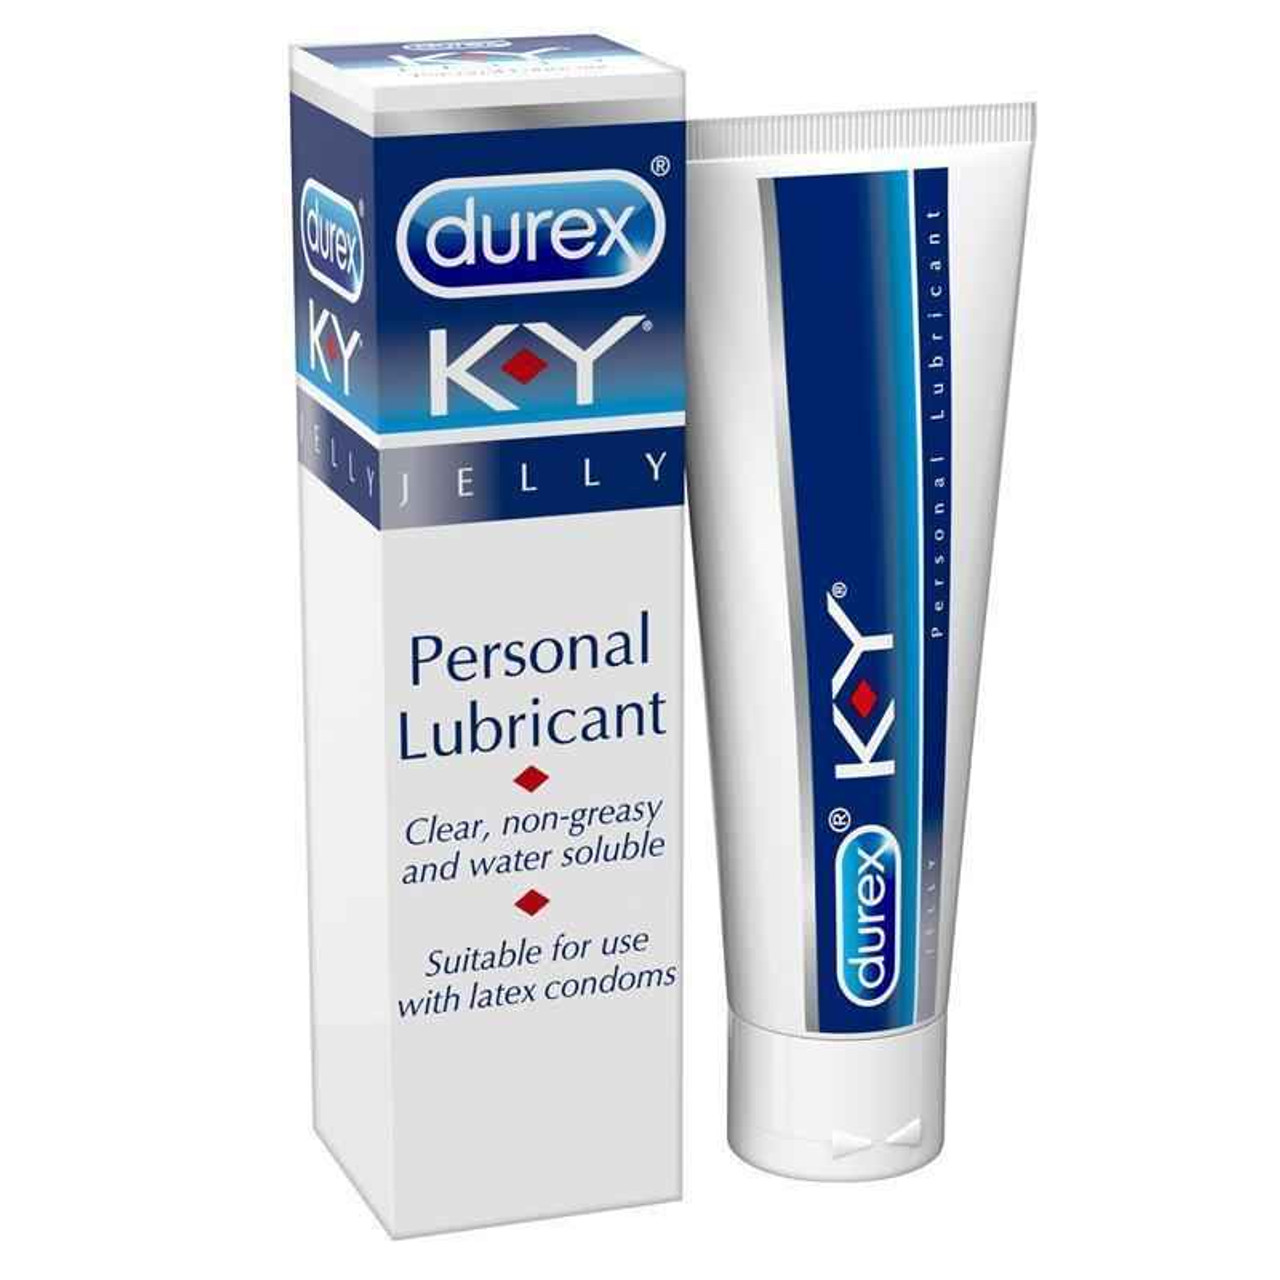 Durex K Y Jelly Personal Lubricant 100g